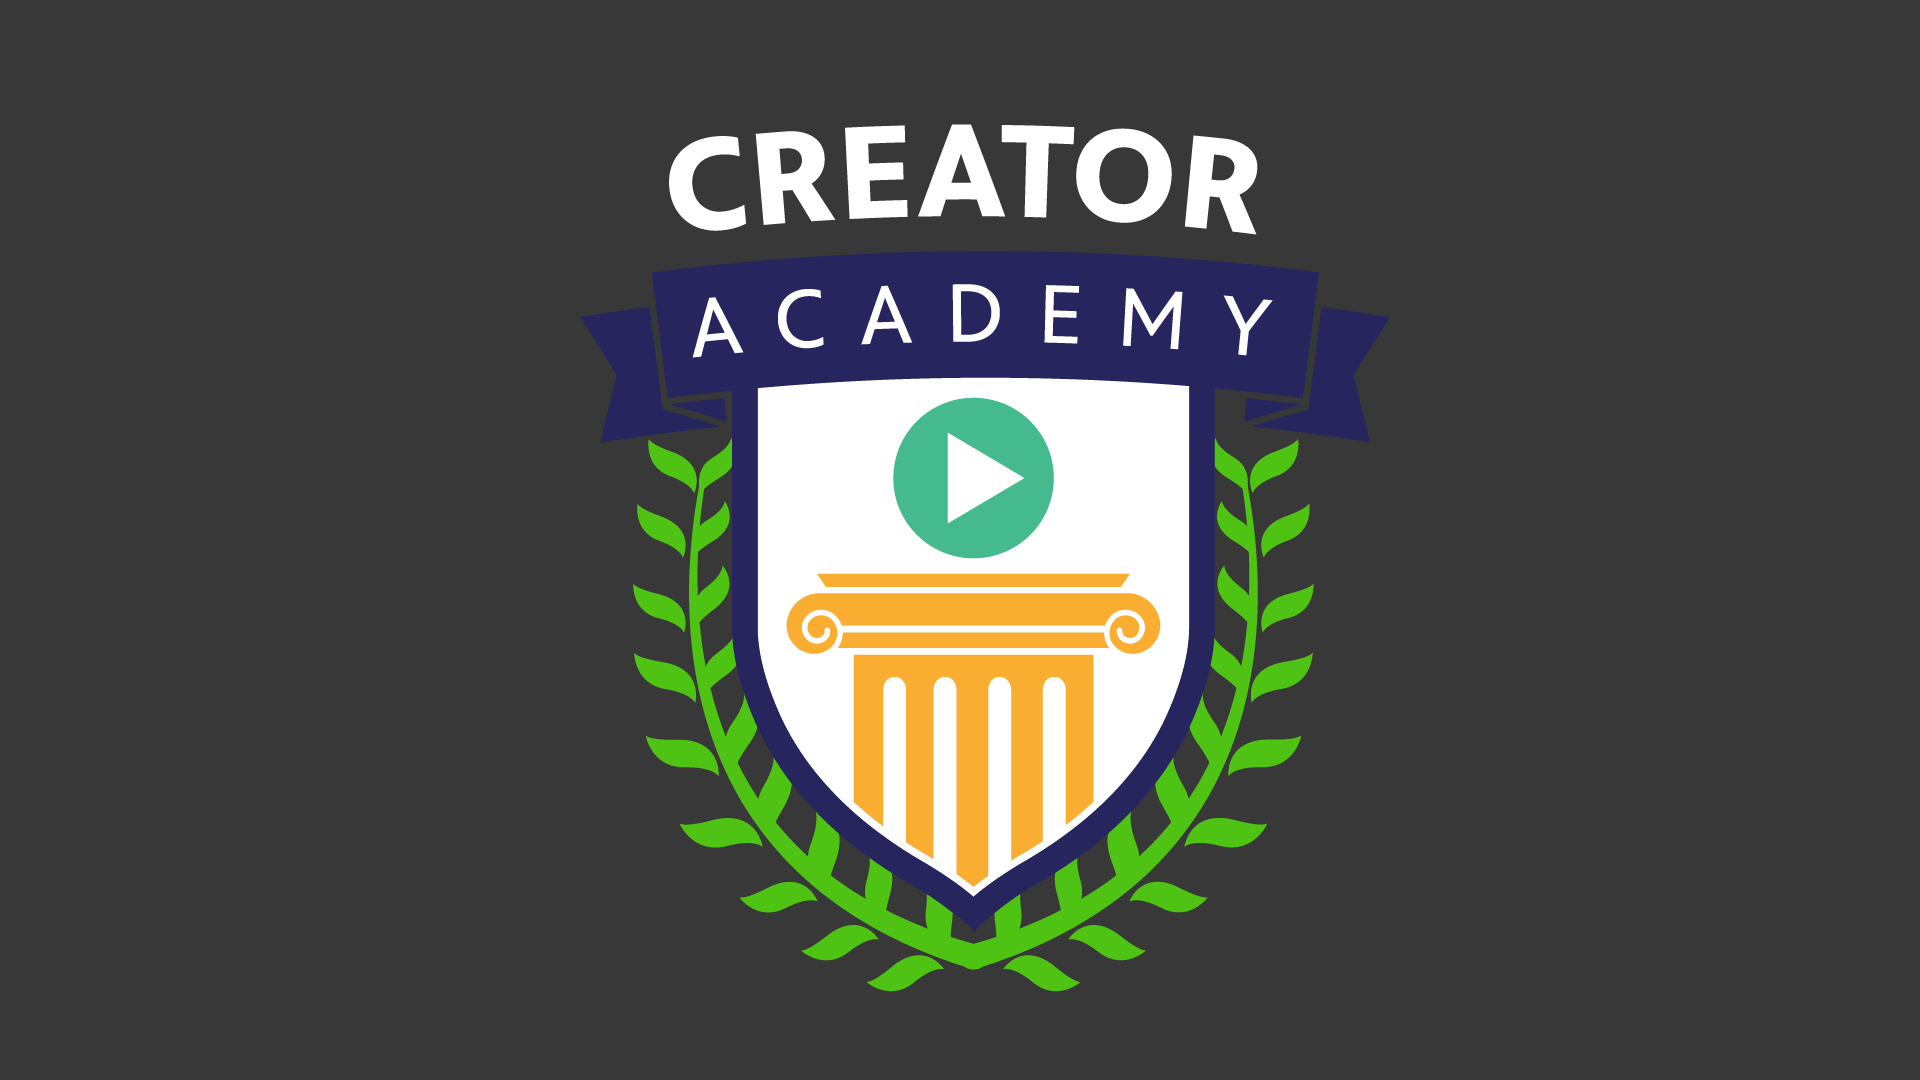 Creator Academy logo on dark background